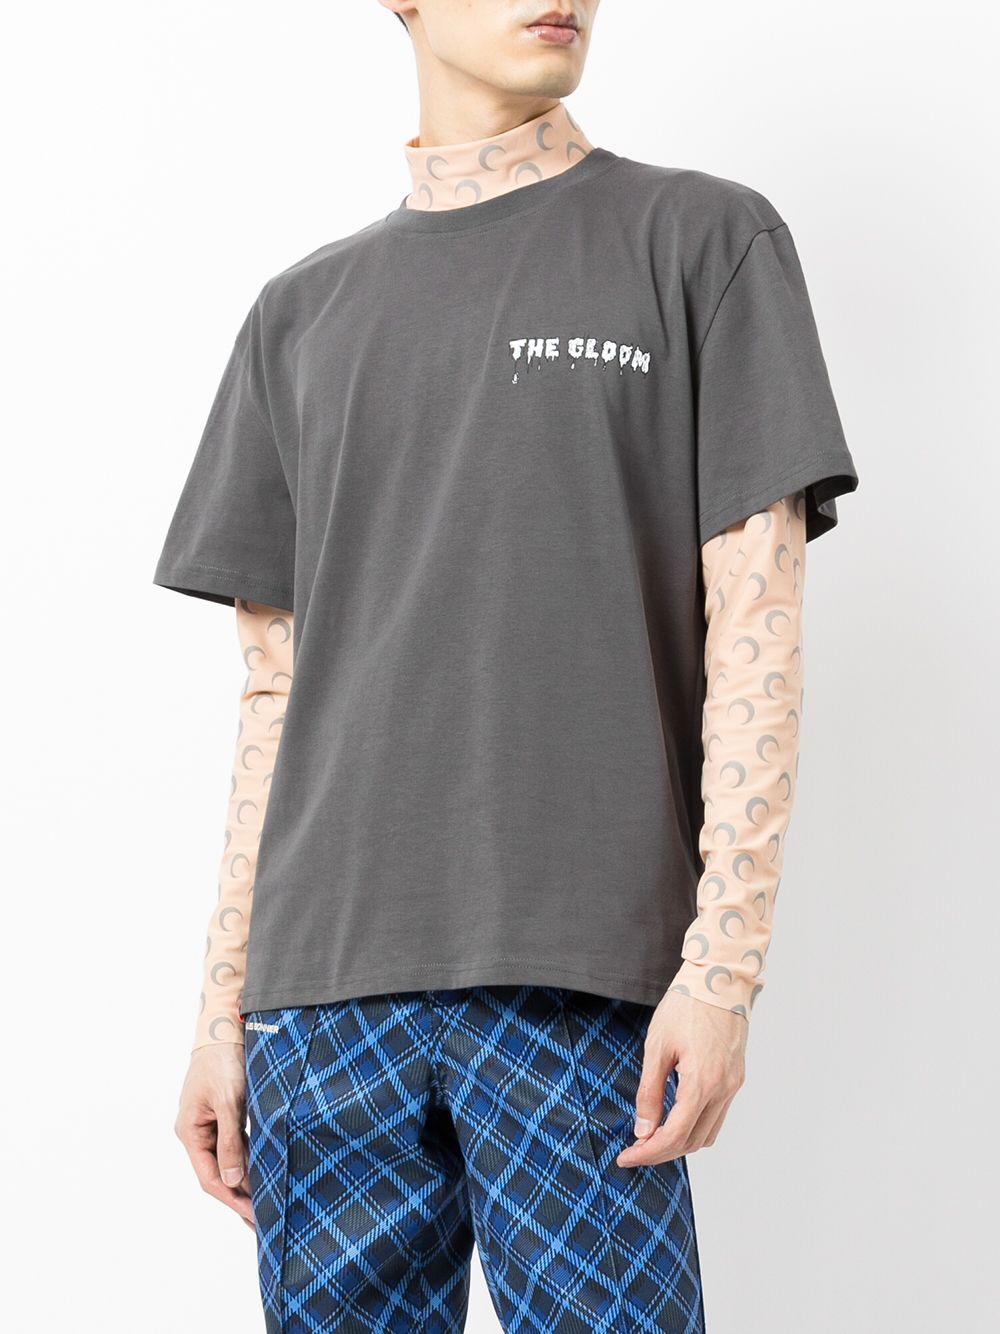 фото Charles jeffrey loverboy футболка с принтом the gloom